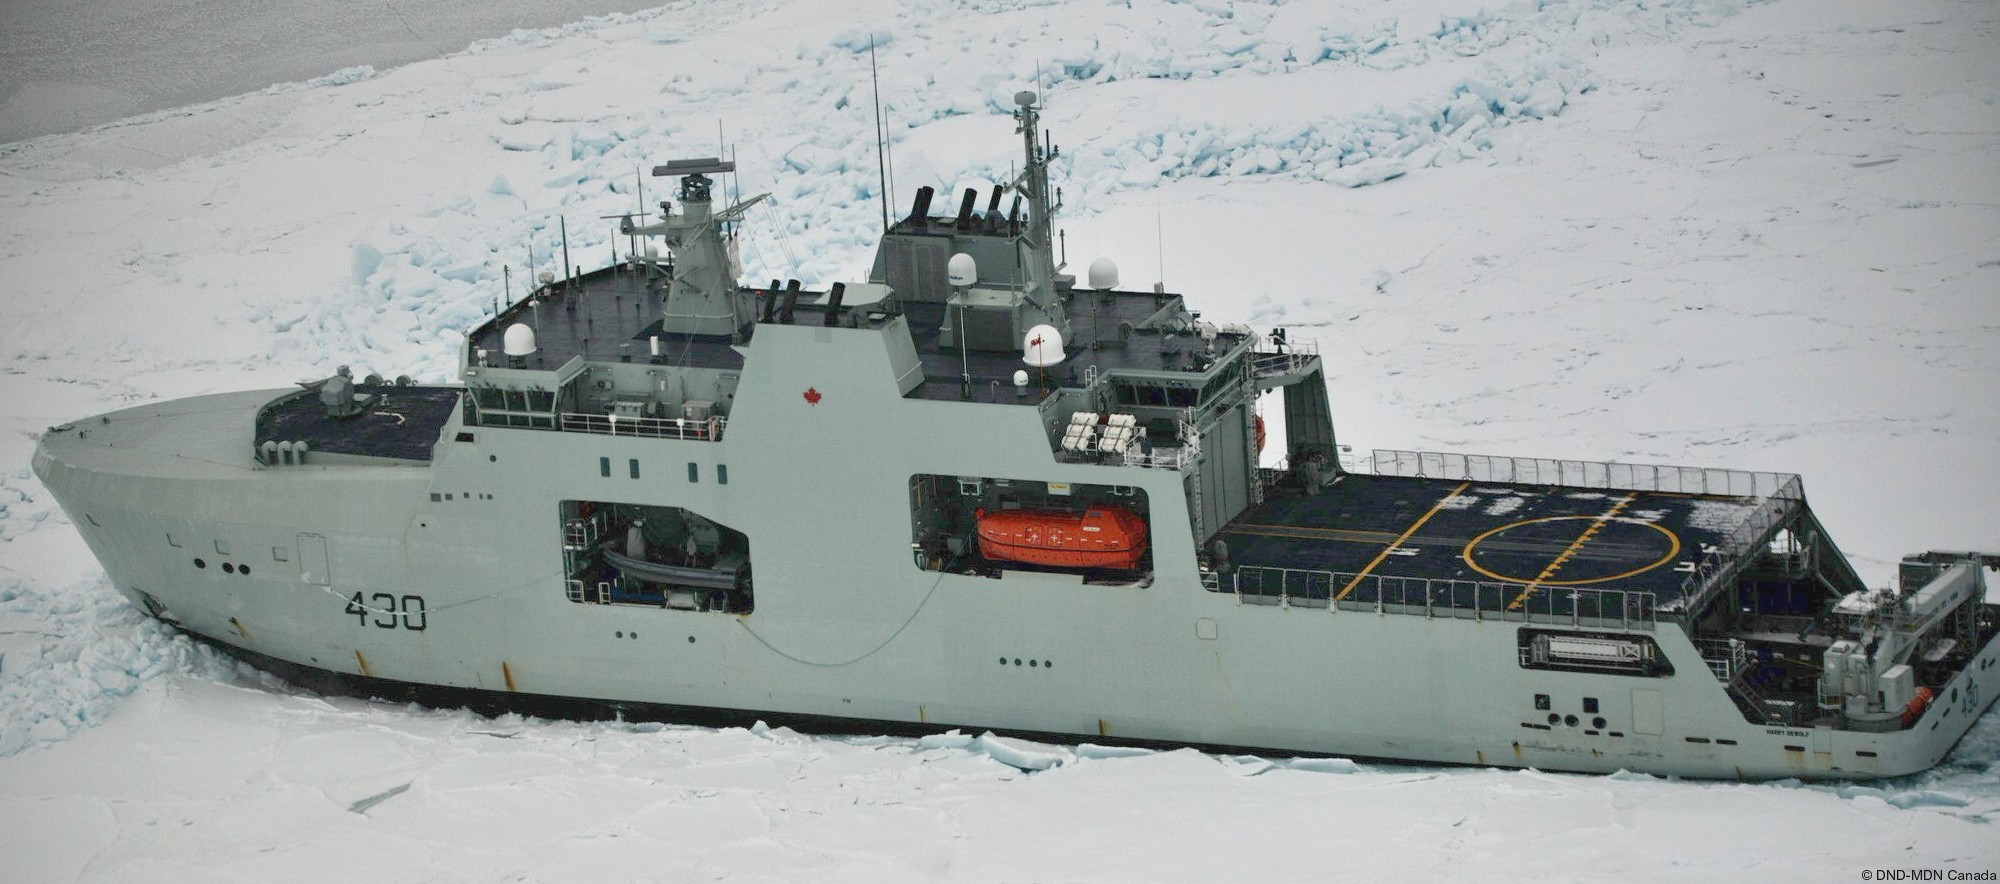 aopv-430 hmcs harry dewolf arctic offshore patrol vessel ncsm royal canadian navy 33 icebreaking